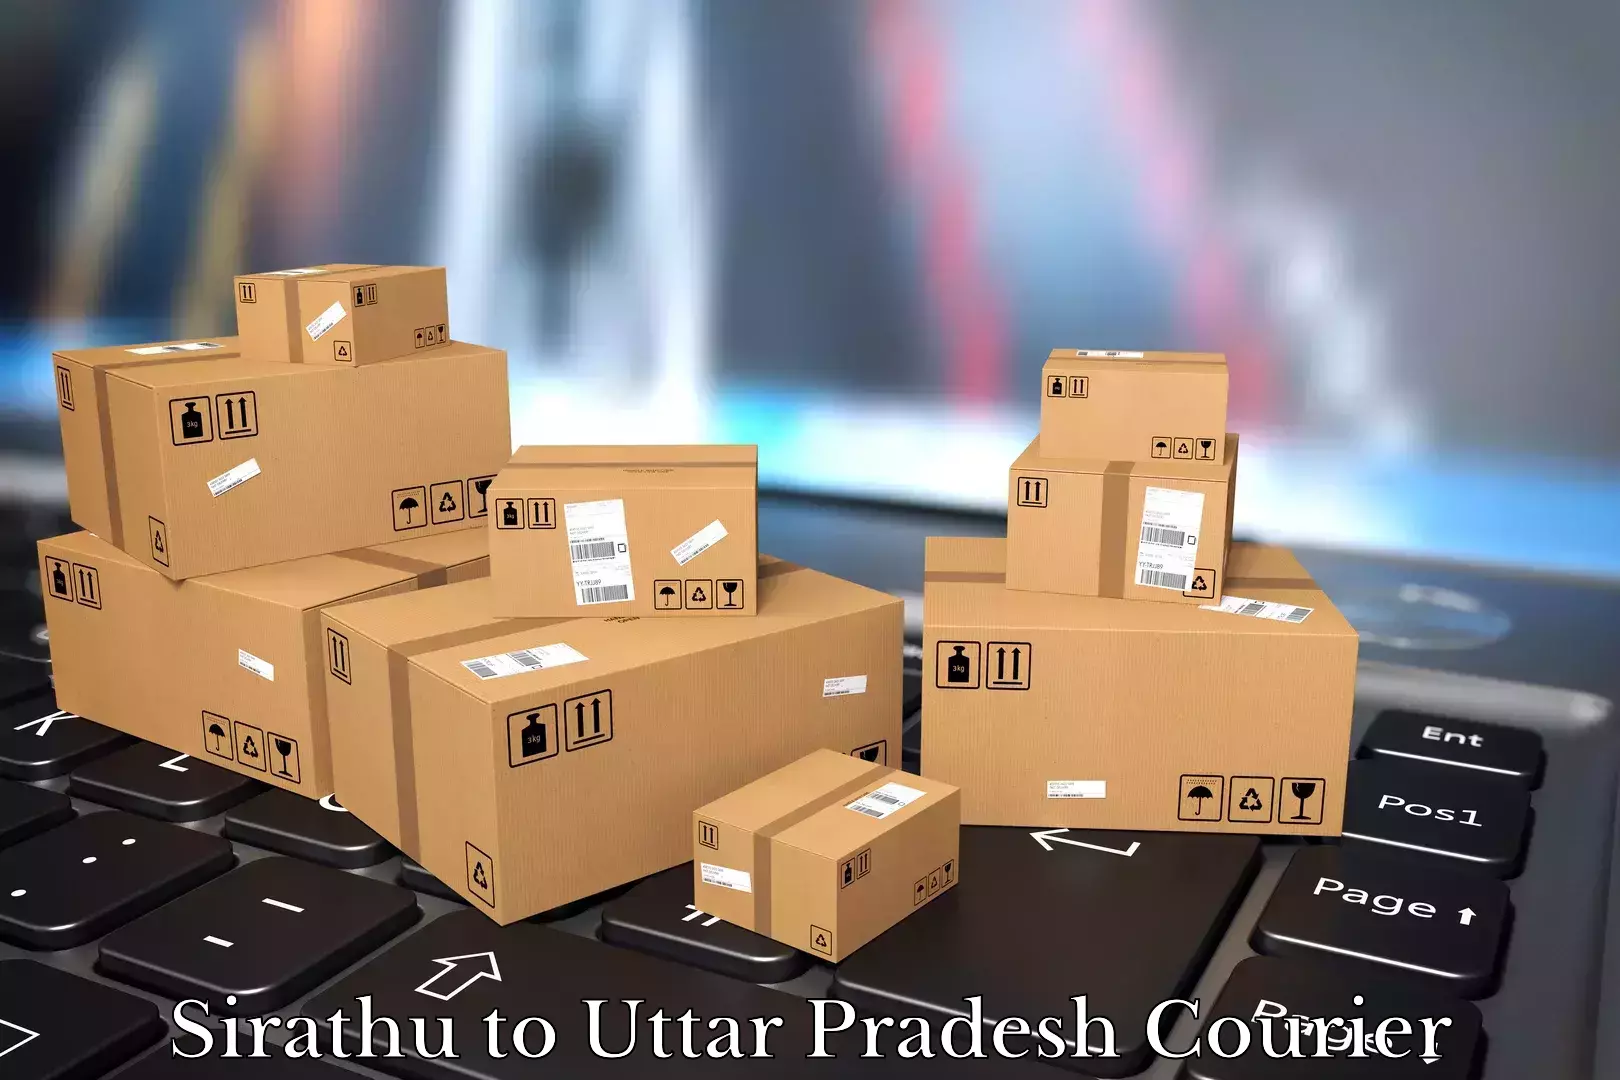 Professional moving company Sirathu to Sahatwar